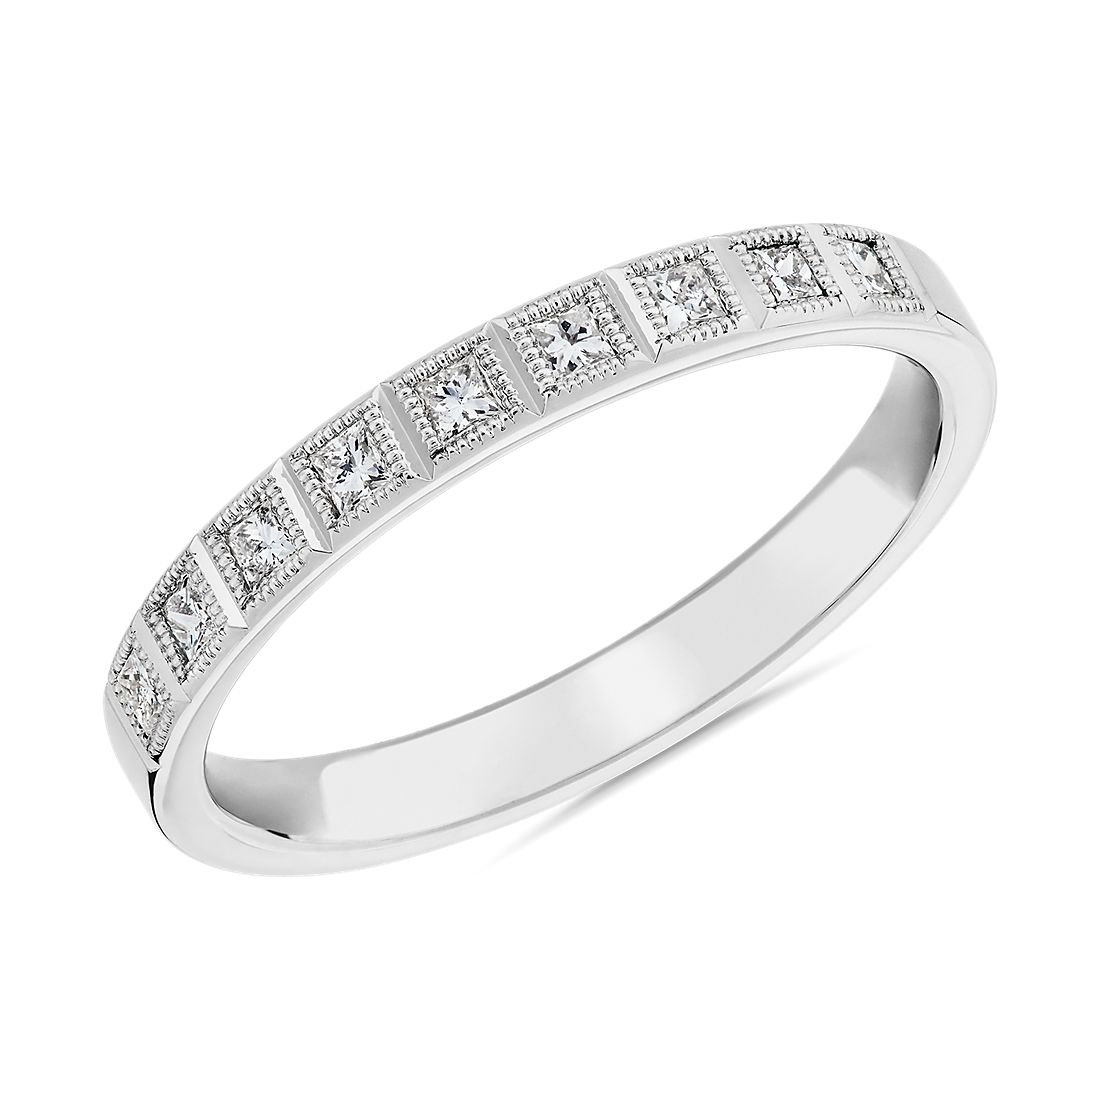 ZAC ZAC POSEN Princess Cut Modern Milgrain Diamond Ring in 14k White Gold (2.5 mm, 1/5 ct. tw.)